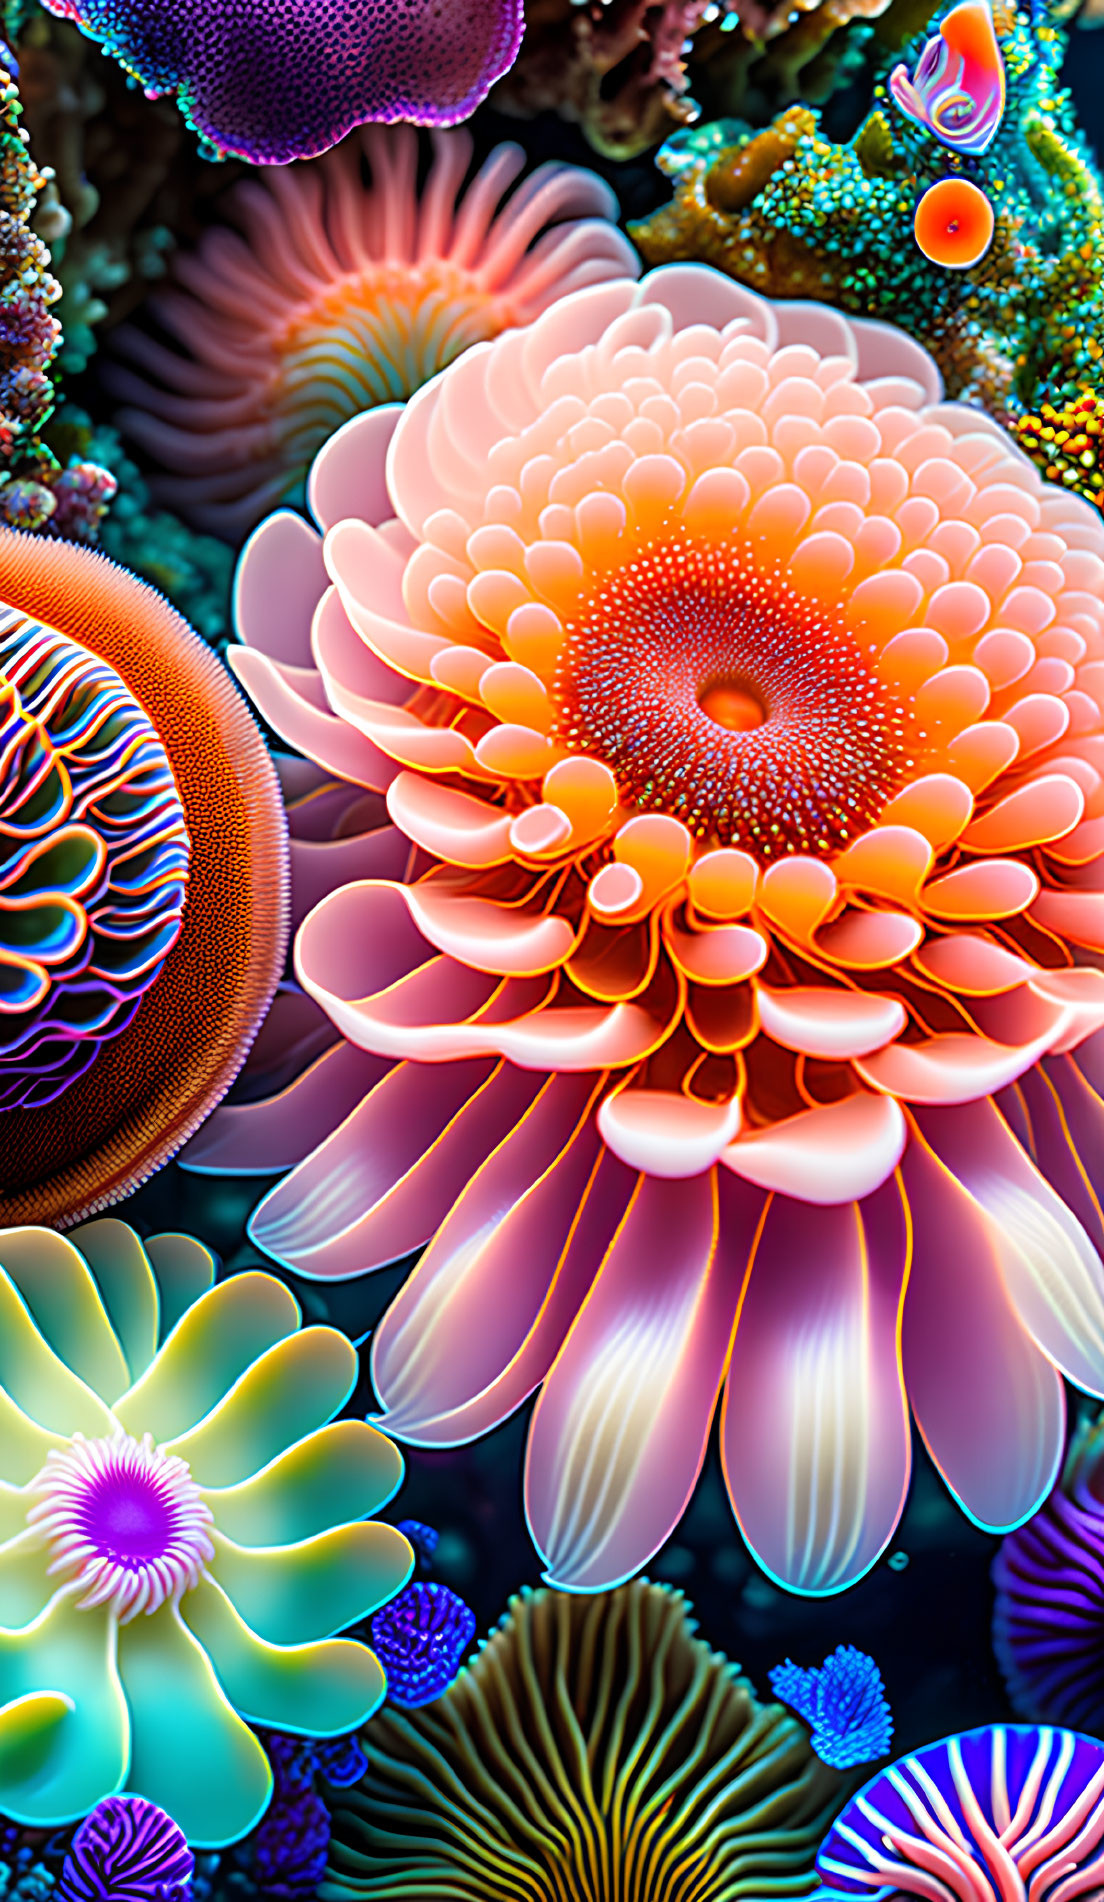 Colorful digital artwork of neon coral and marine flora in underwater scene